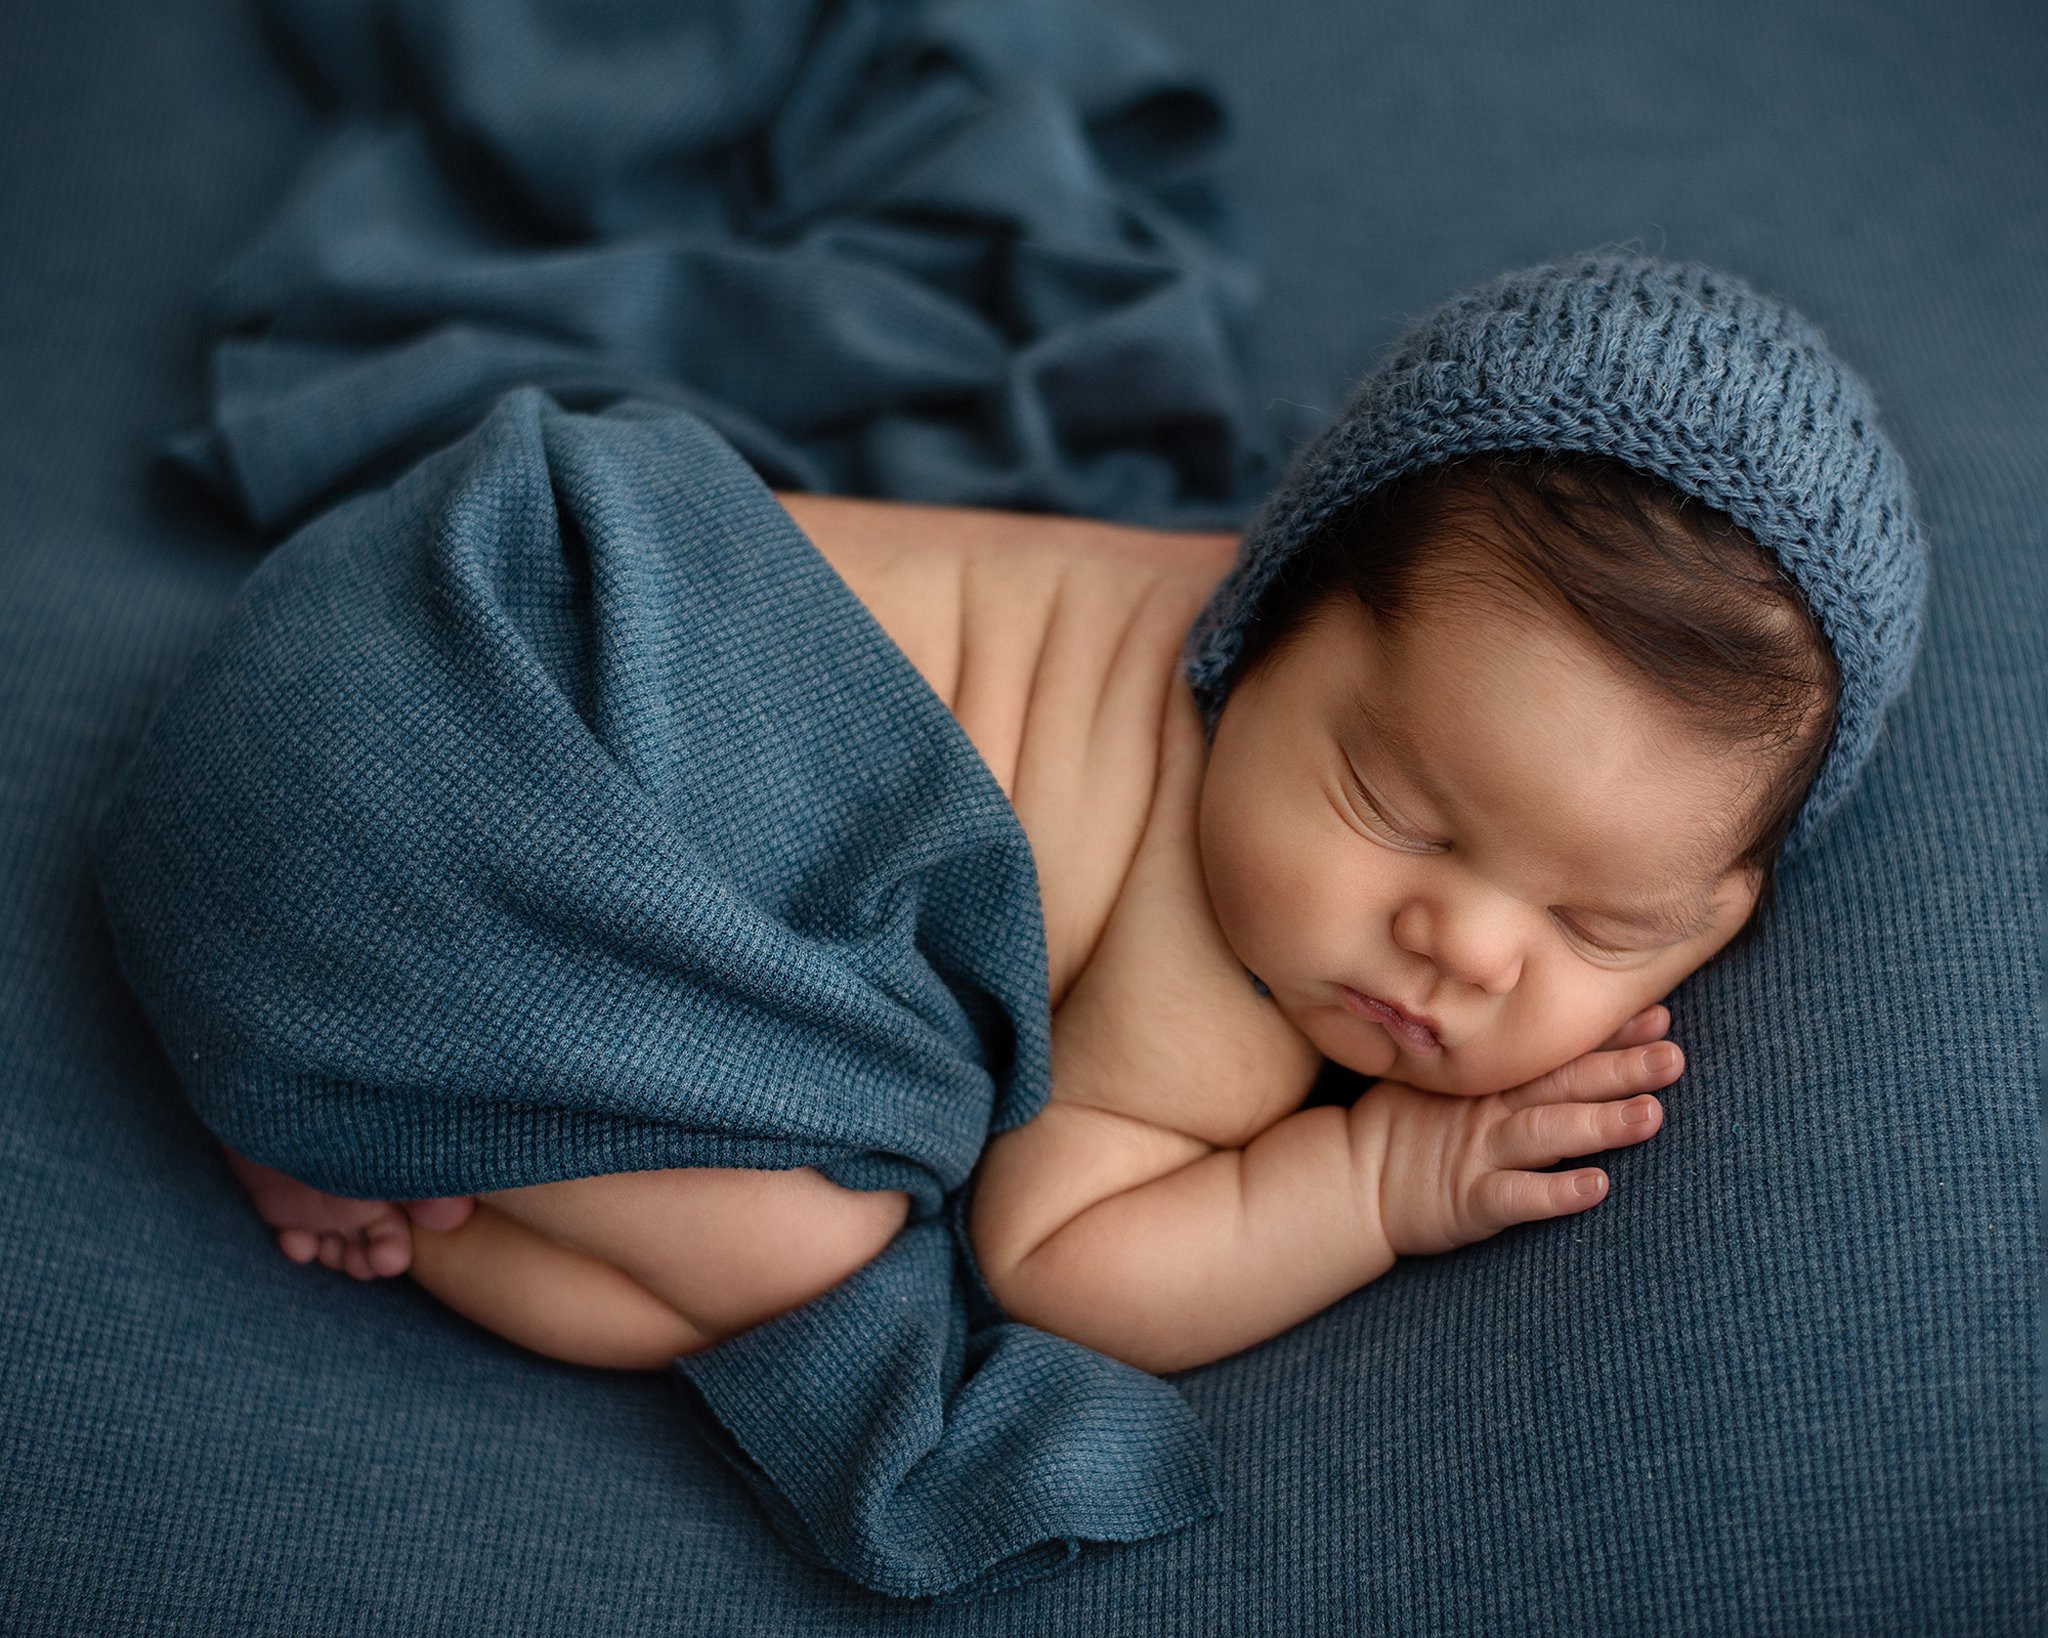 A newborn baby in a knit bonnet sleeps on a blue bed